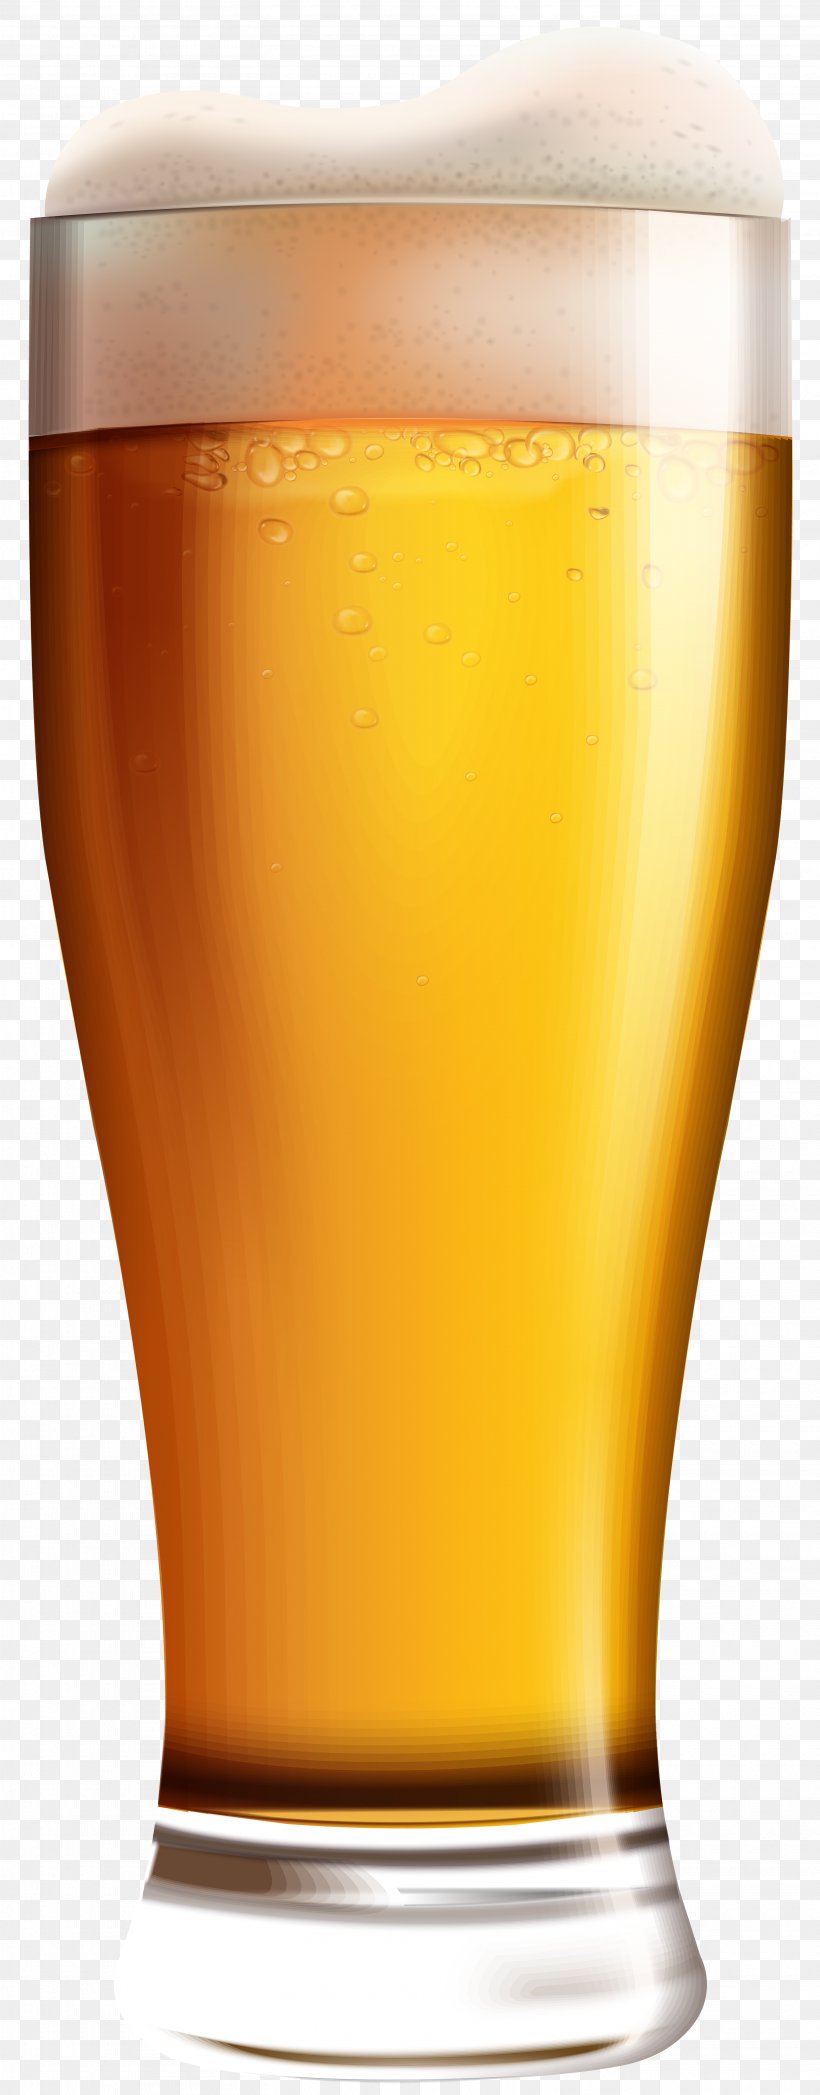 Wheat Beer Beer Pong Clip Art, PNG, 3130x8000px, Beer, Beer Bottle, Beer Glass, Beer Glasses, Cup Download Free